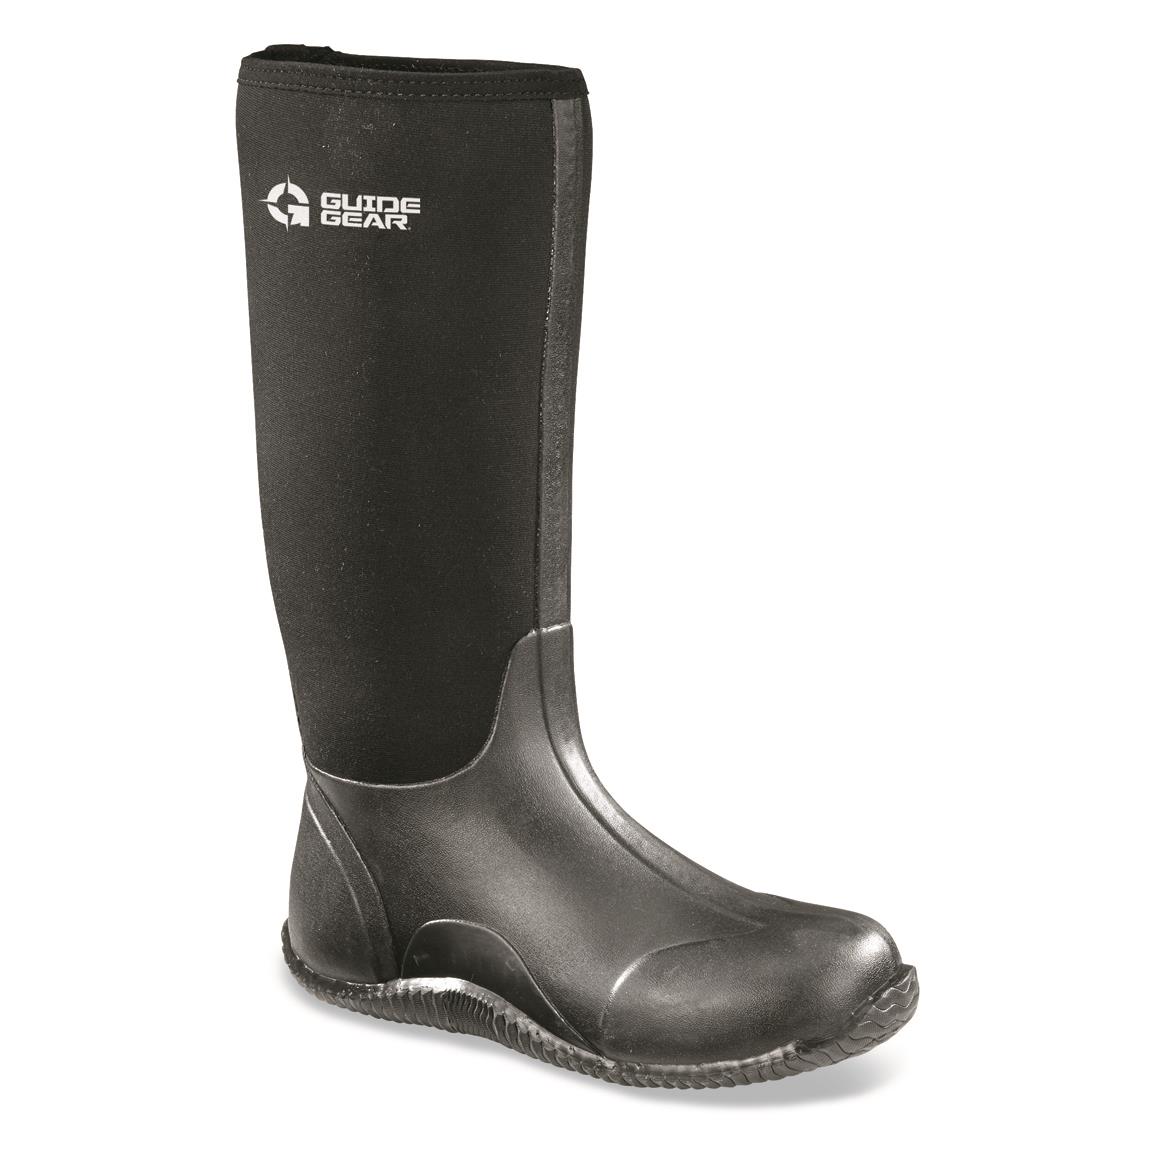 Guide Gear Men's High Bogger Waterproof Rubber Boots, Black